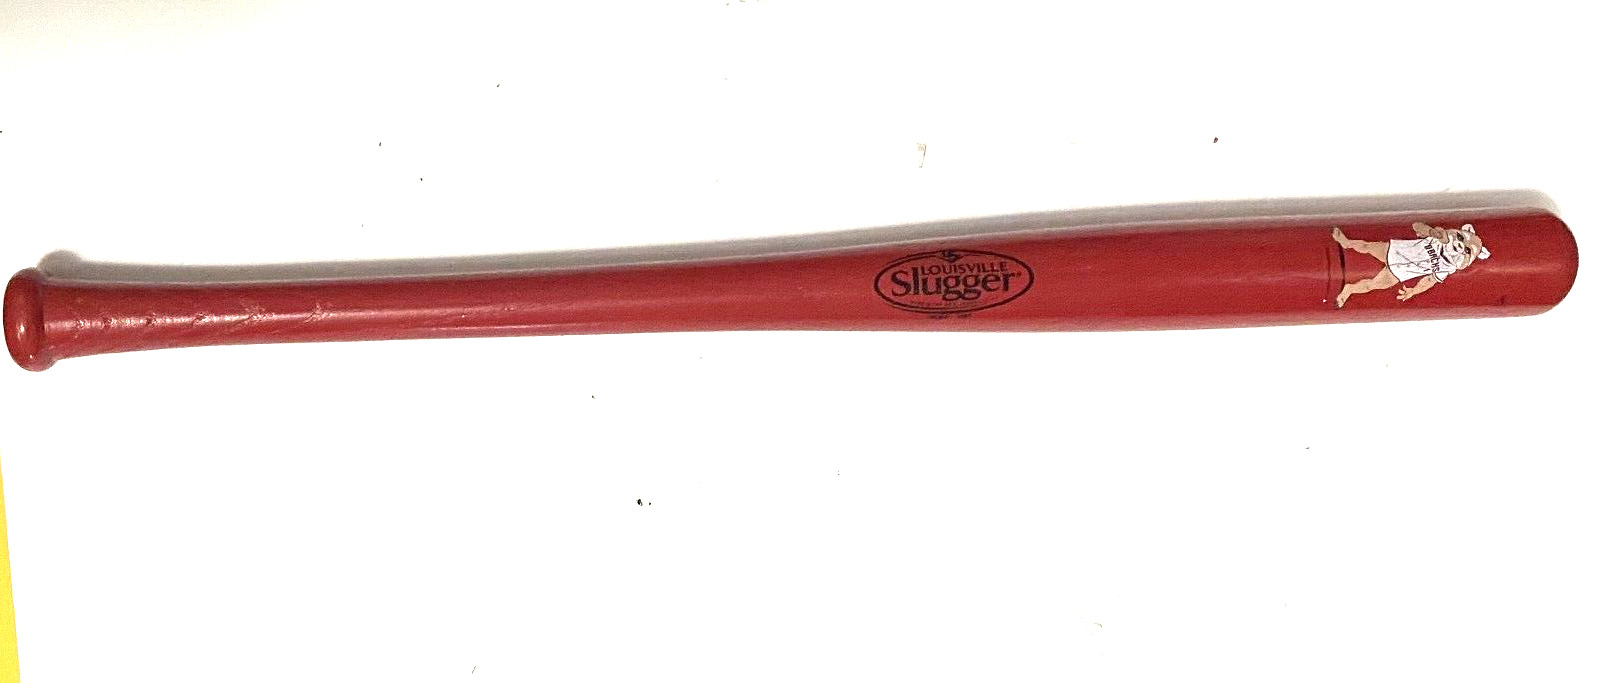 Souvenir Mini 18" Arizona Diamondbacks Baxter wood baseball bat.  Red